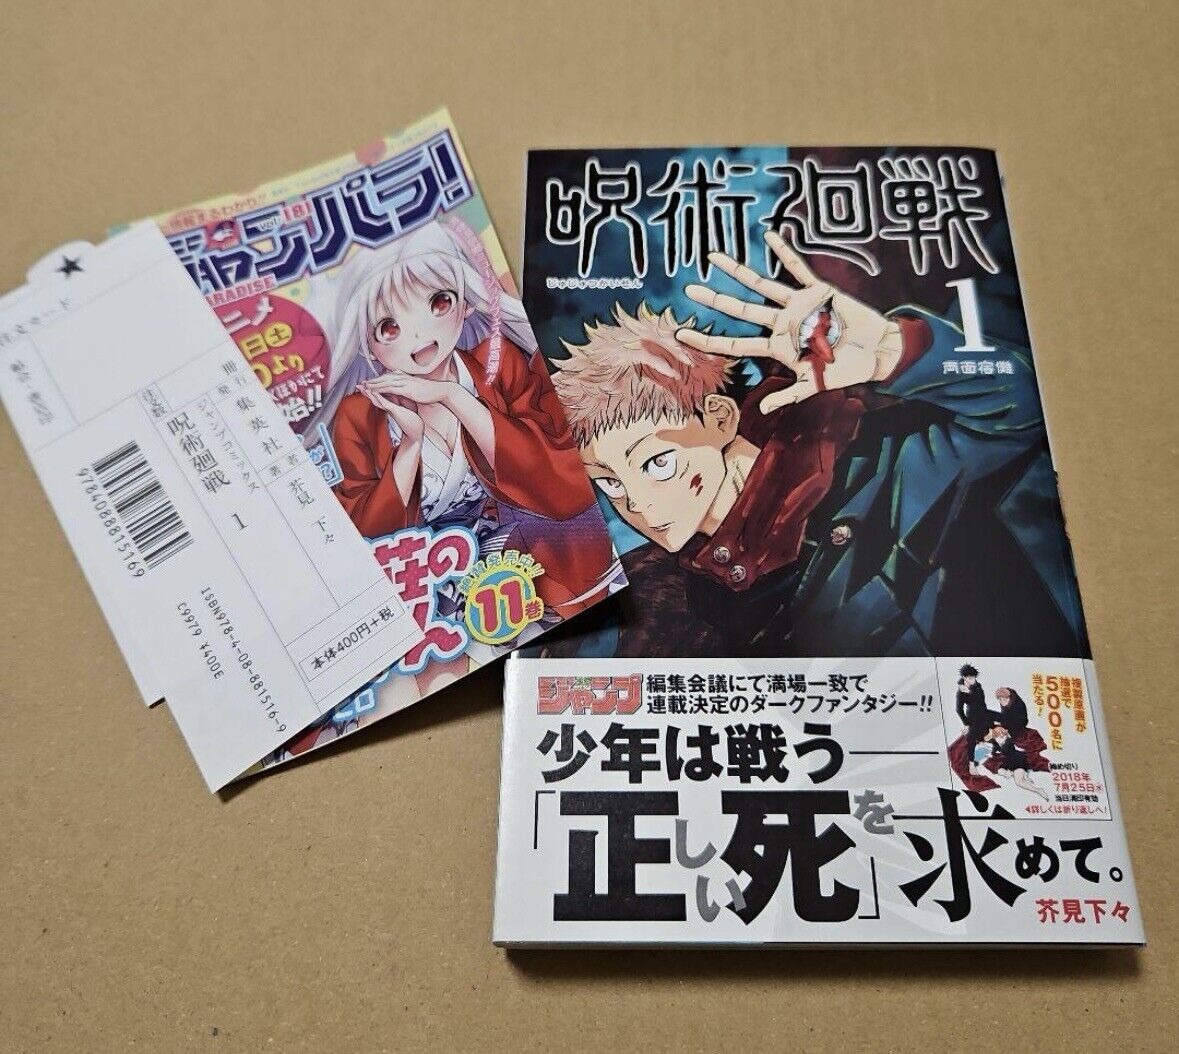 Rare Obi 1st Print Edition First Jujutsu Kaisen Volume 1 Japanese Manga Jump